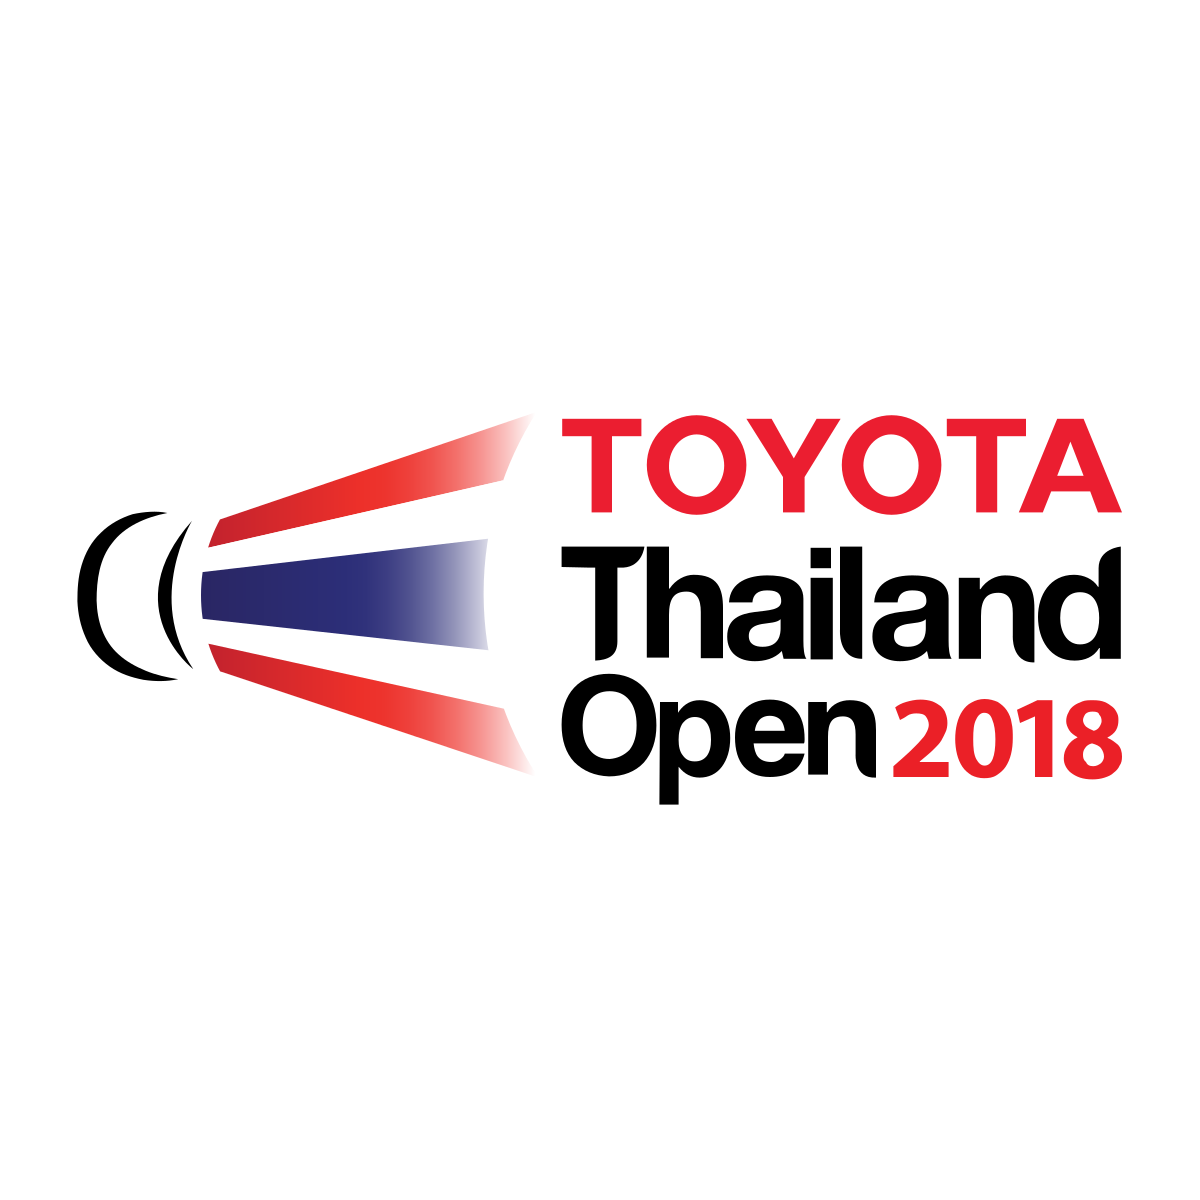 2018 Thailand Open (badminton)